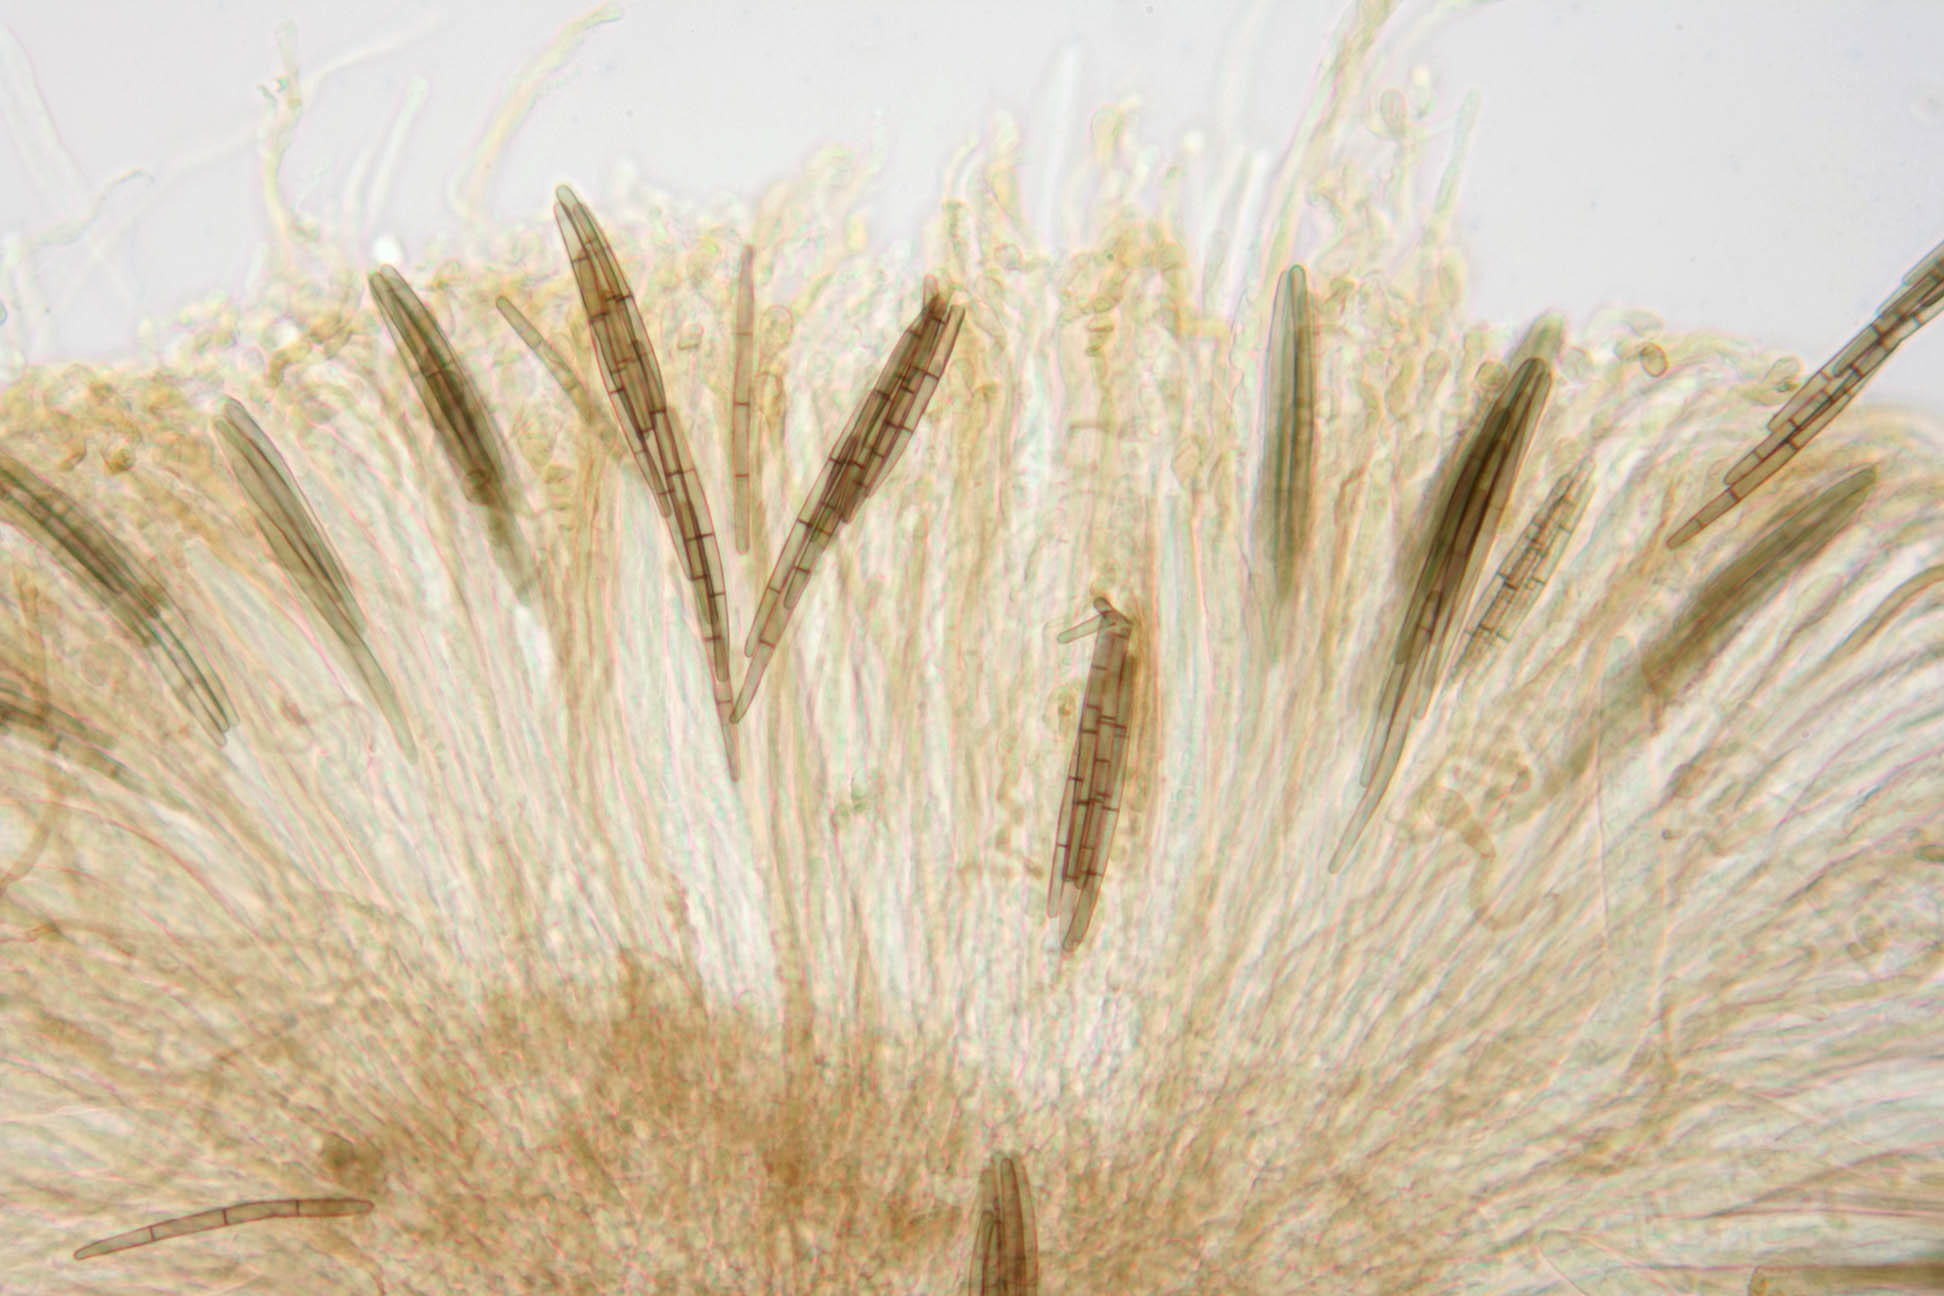 Image of Glutinoglossum glutinosum (Pers.) Hustad, A. N. Mill., Dentinger & P. F. Cannon 2013